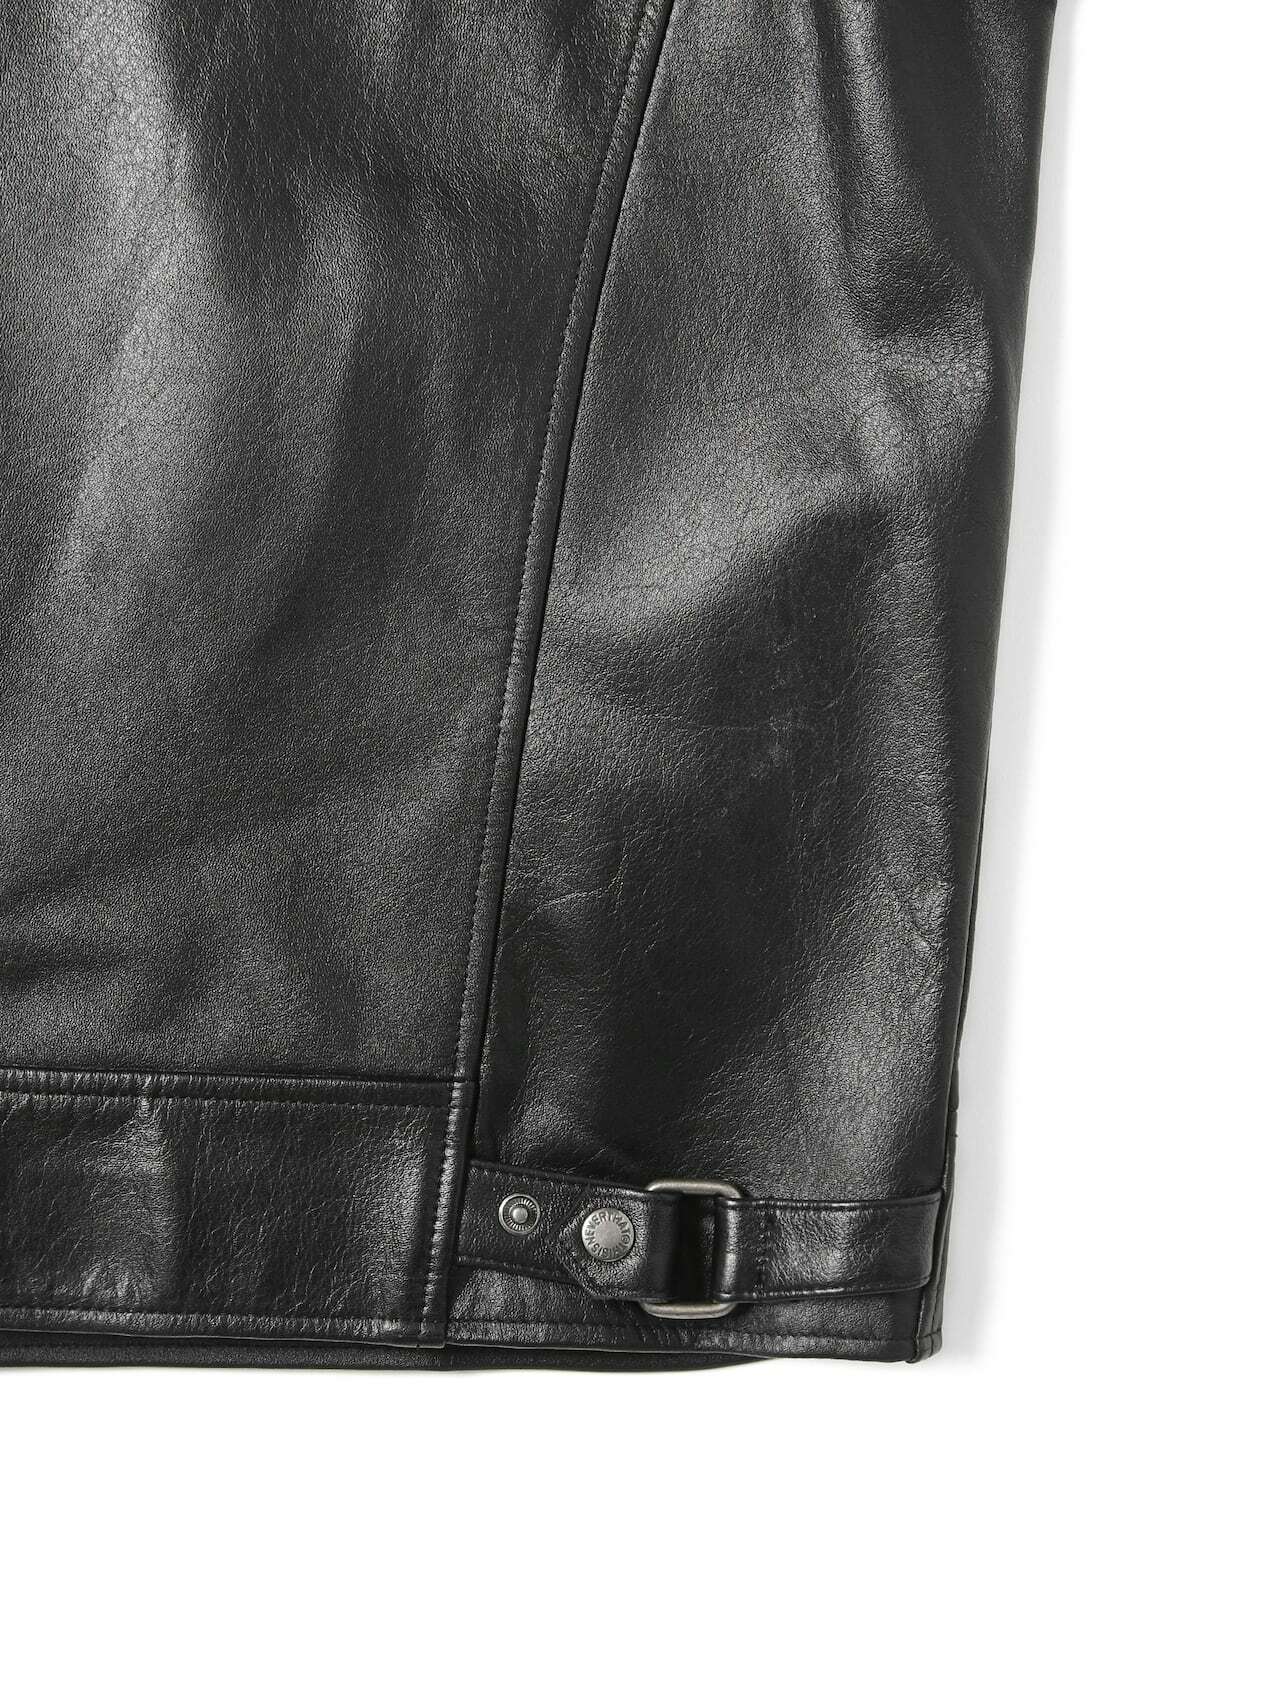 Leather-Sports-Jacket-Black5.jpg